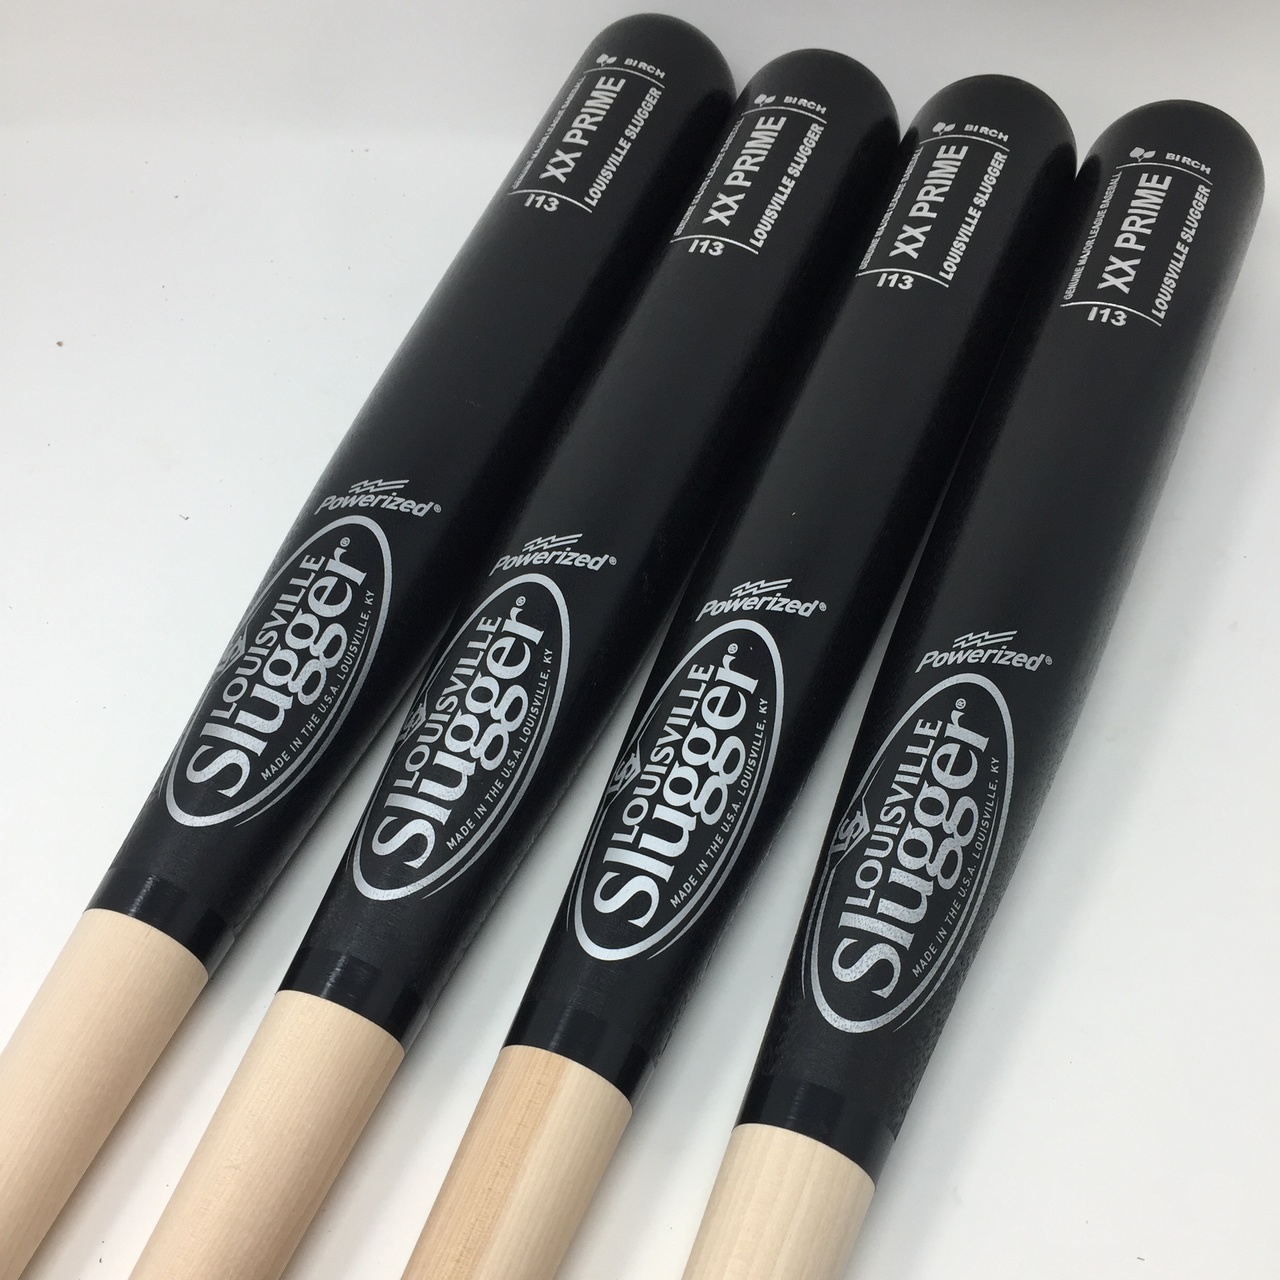 louisville-slugger-wood-baseball-bat-pack-33-inch-4-bats-i13-xx-prime-birch BATPACK-0009 Louisville Does not apply 33 Inch Wood Bats from Louisville Slugger.  XX Prime Birch Wood